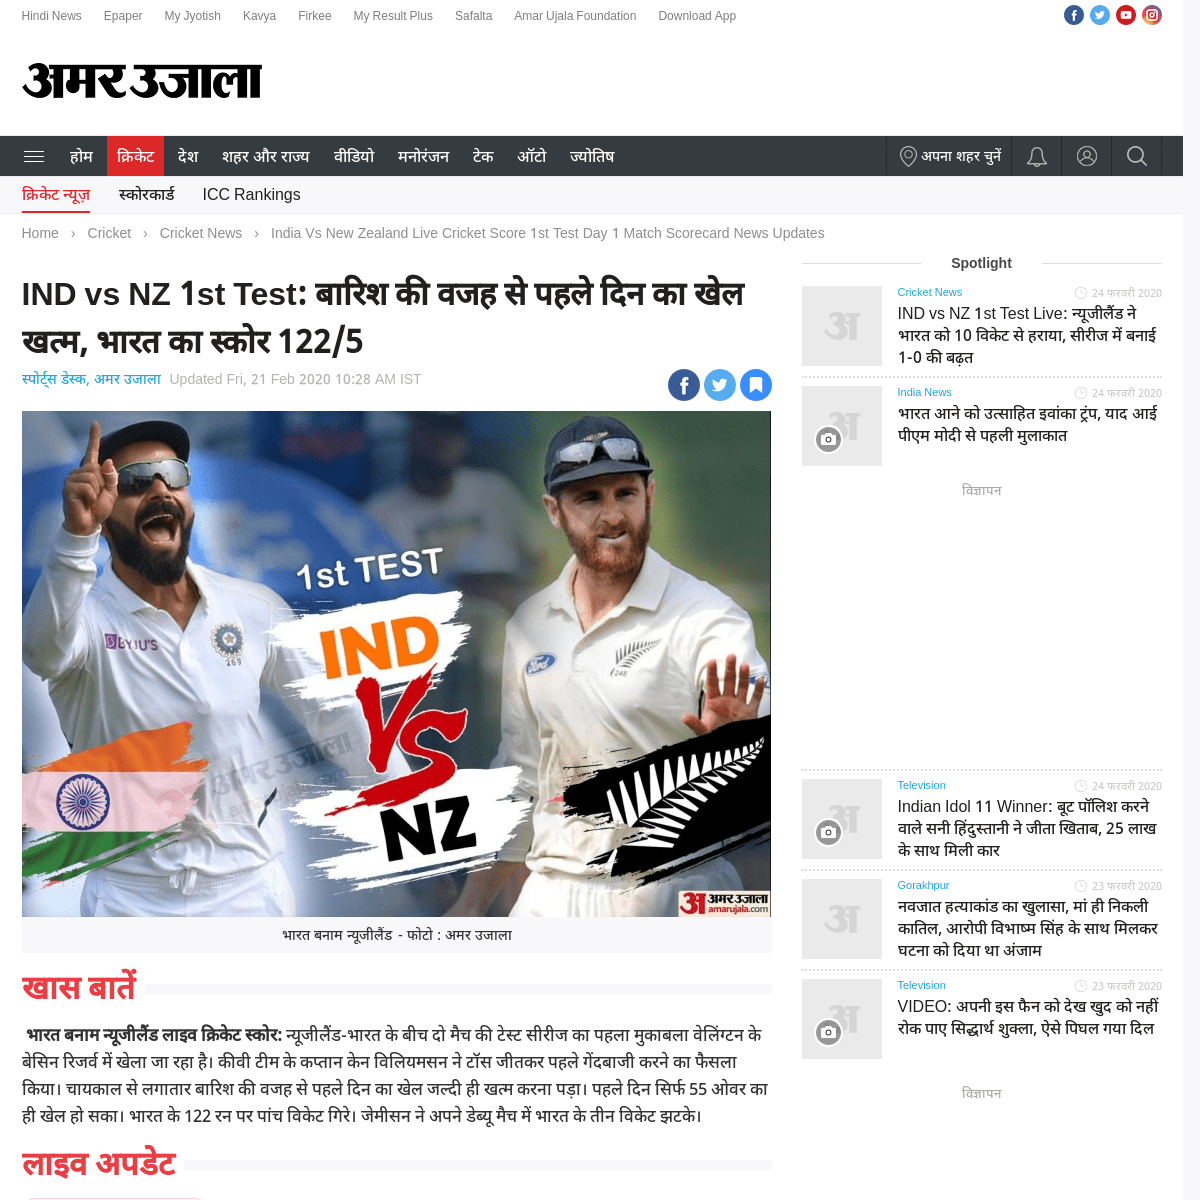 A complete backup of www.amarujala.com/cricket/cricket-news/india-vs-new-zealand-1st-test-match-day-1-live-cricket-score-news-up